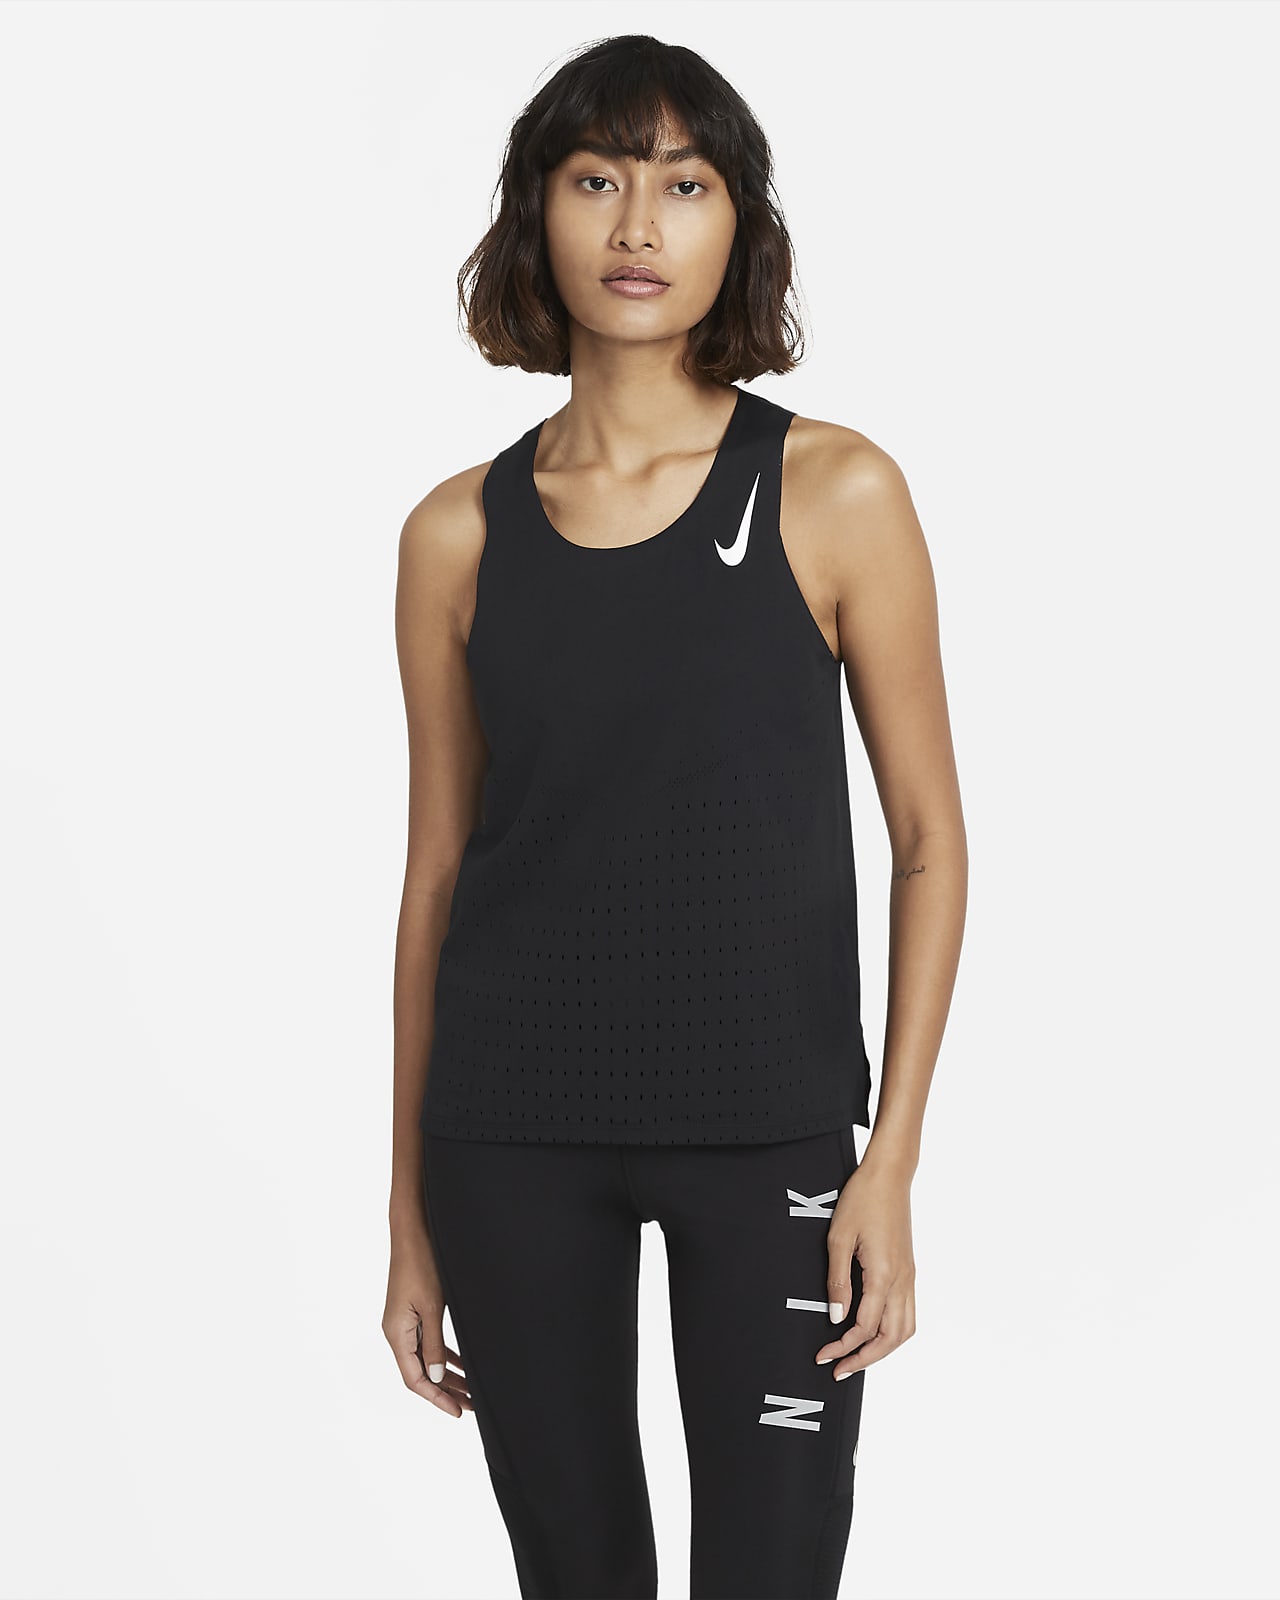 Nike AeroSwift Women's Running Singlet